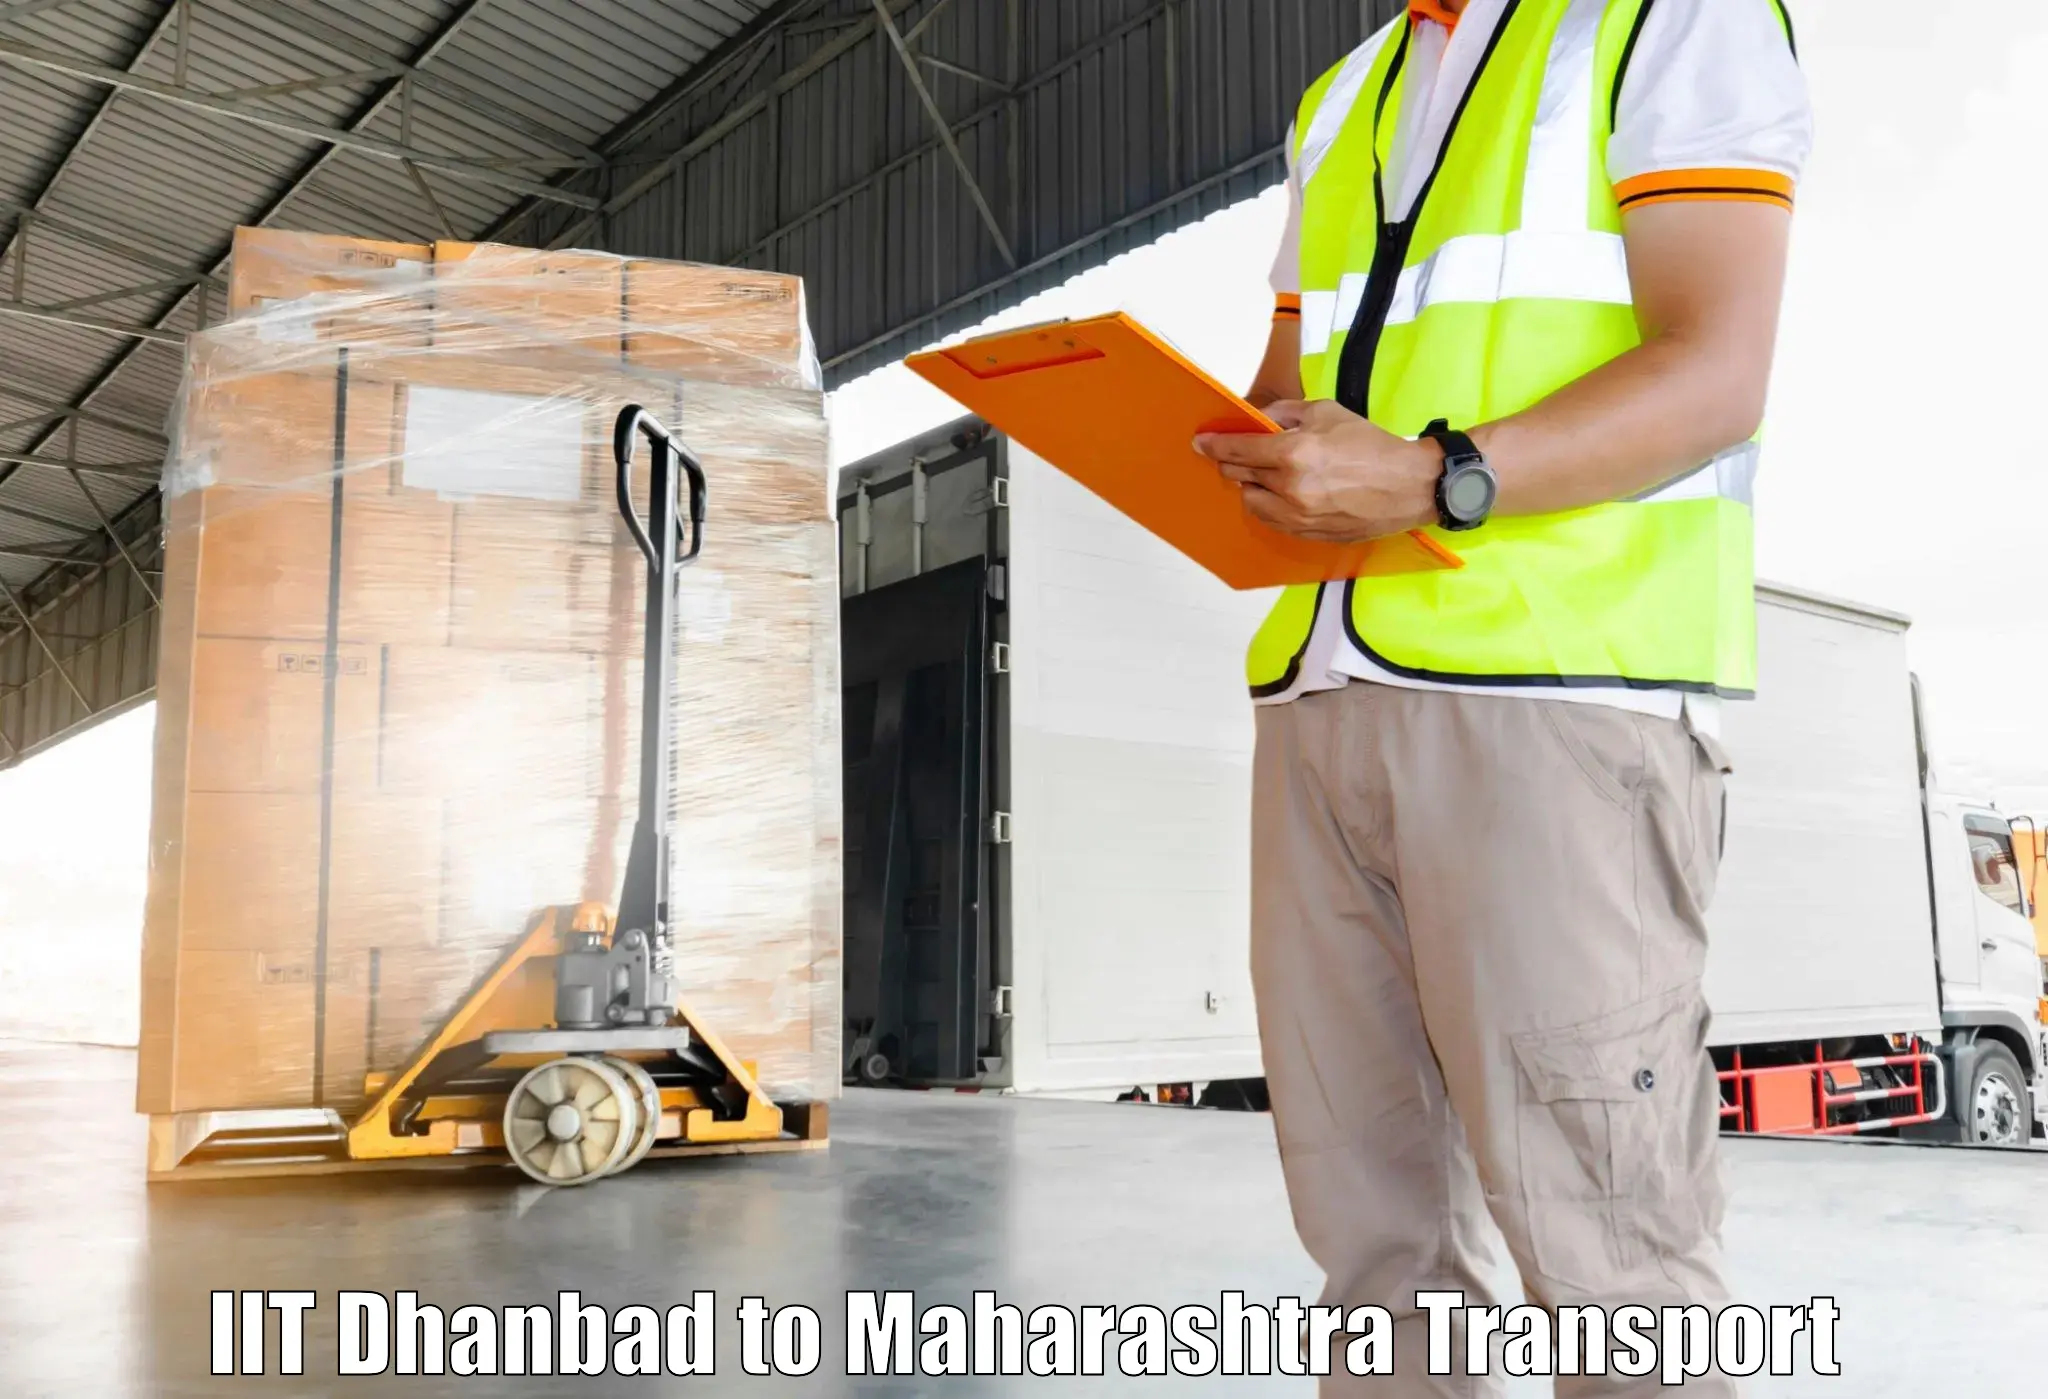 Online transport service IIT Dhanbad to Ghatanji